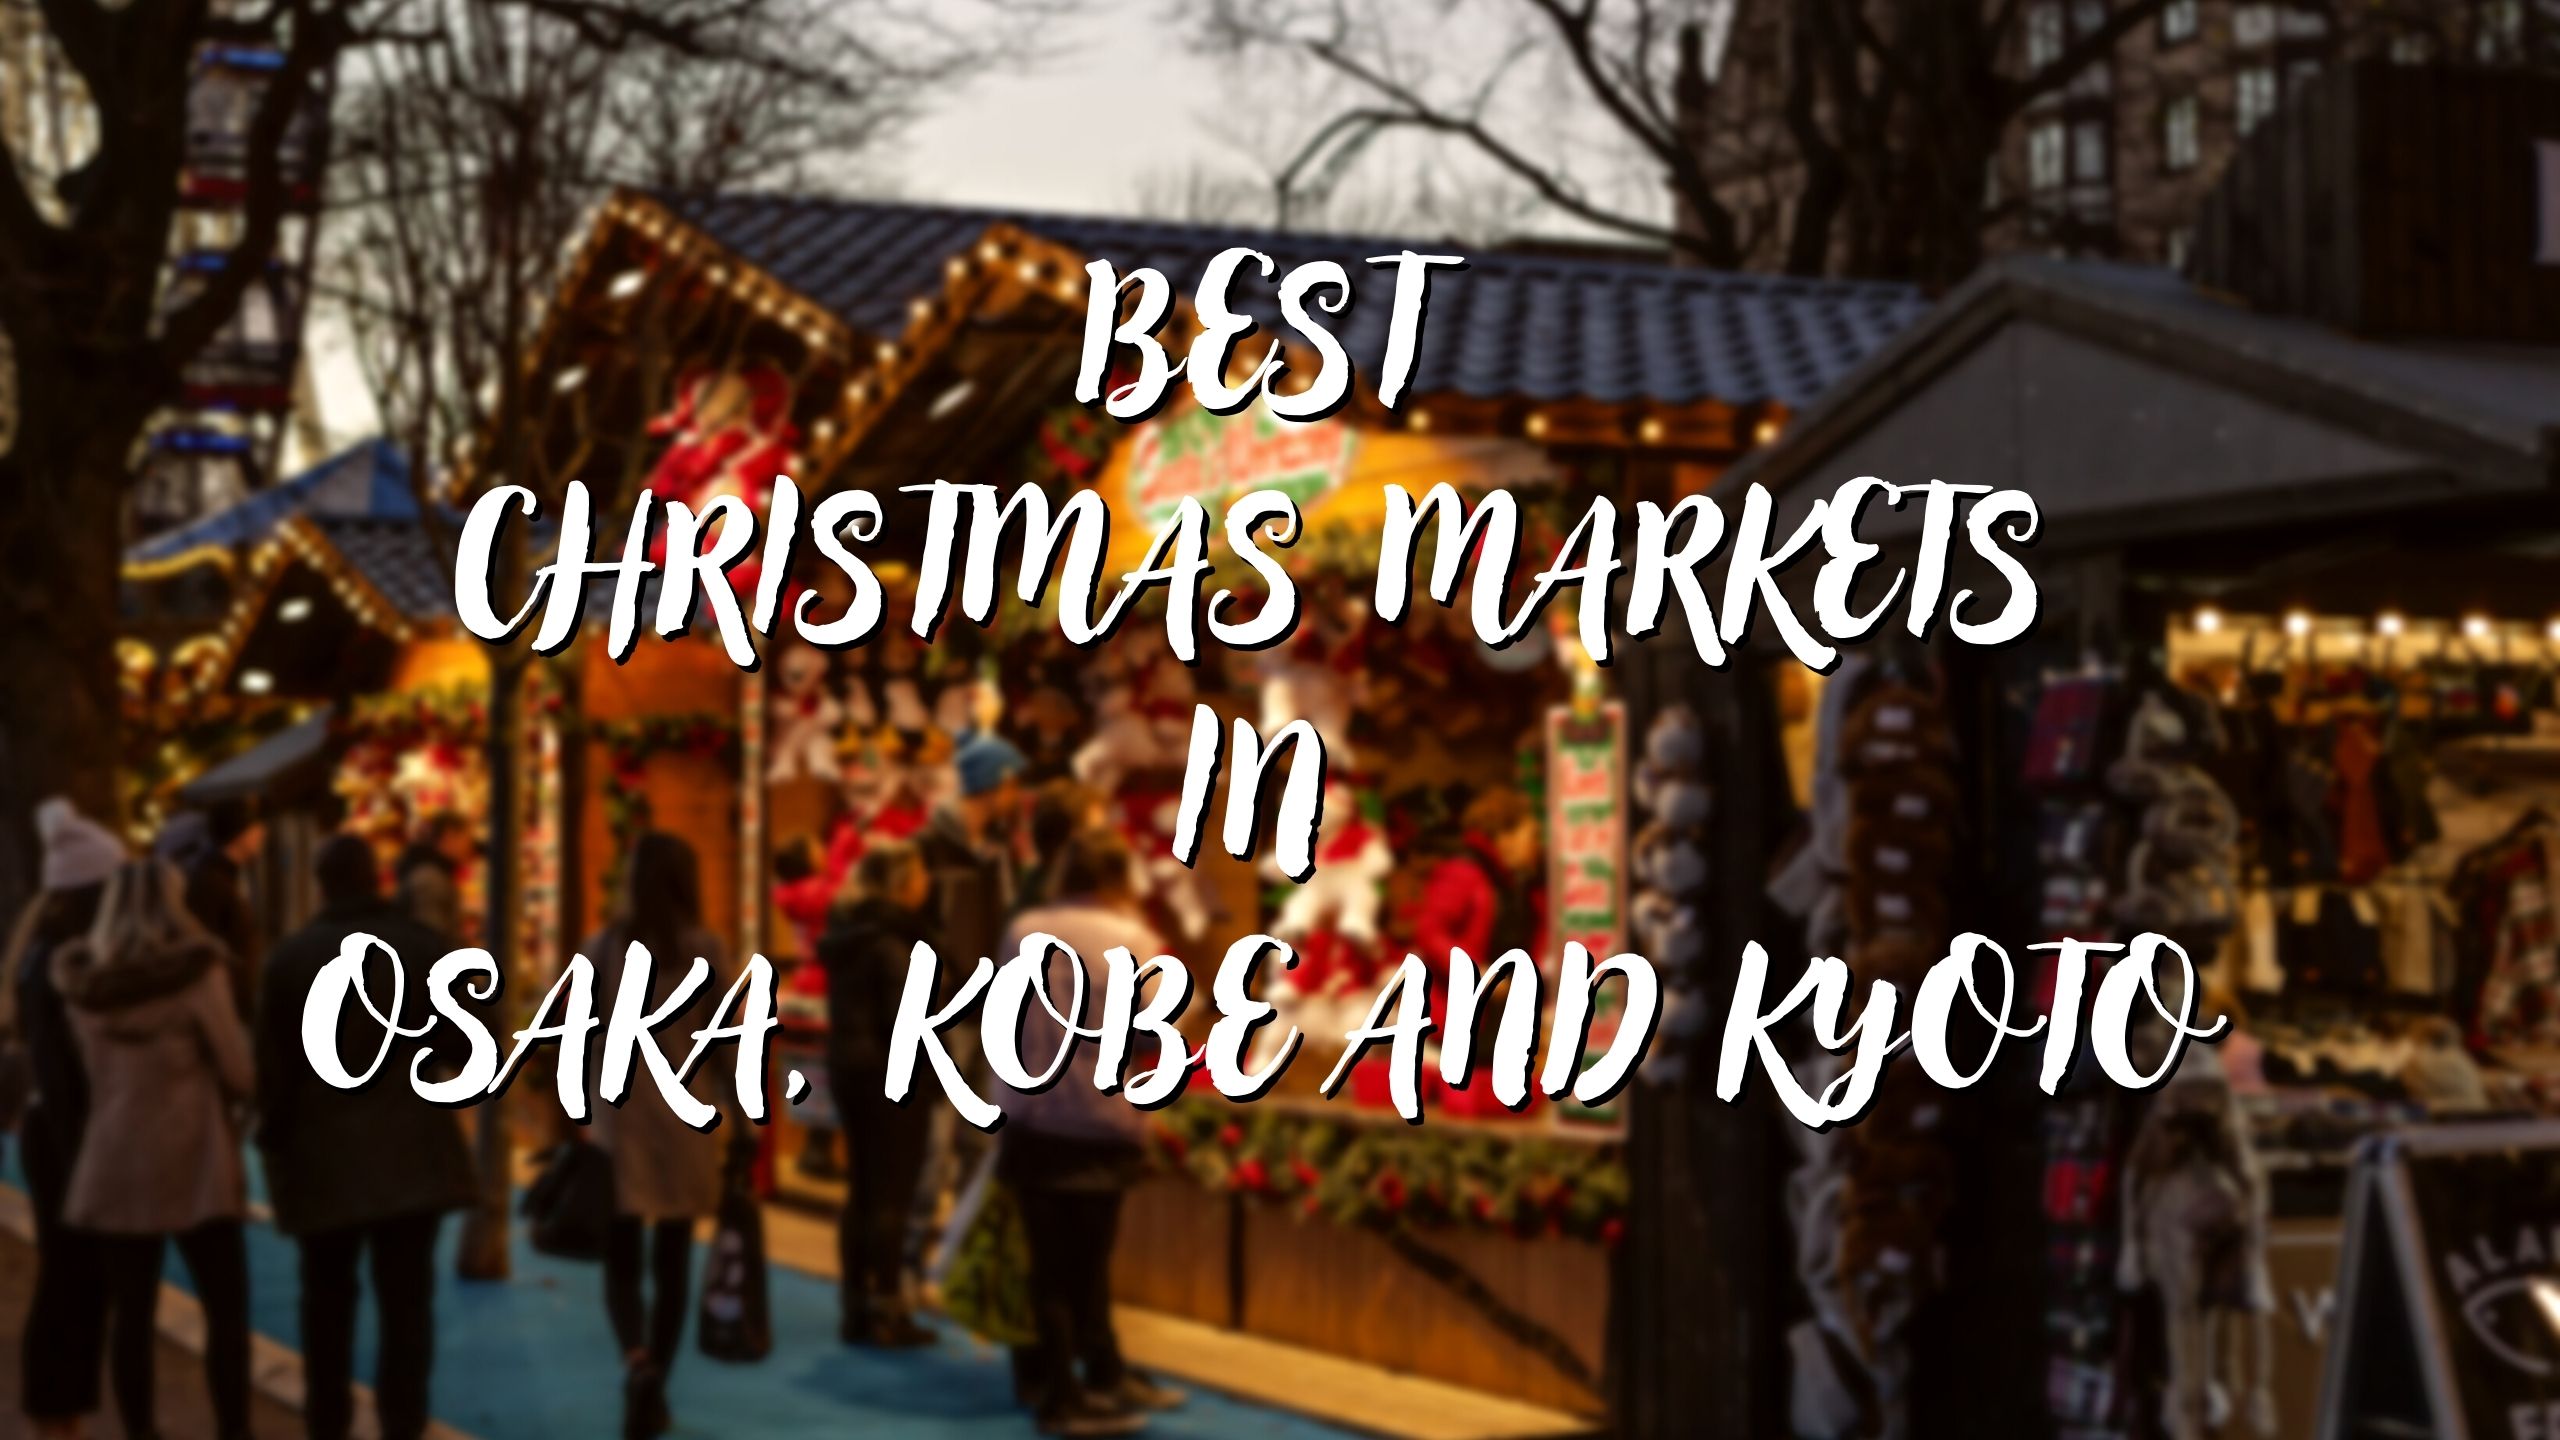 Best Christmas Markets in Osaka, Kobe and Kyoto